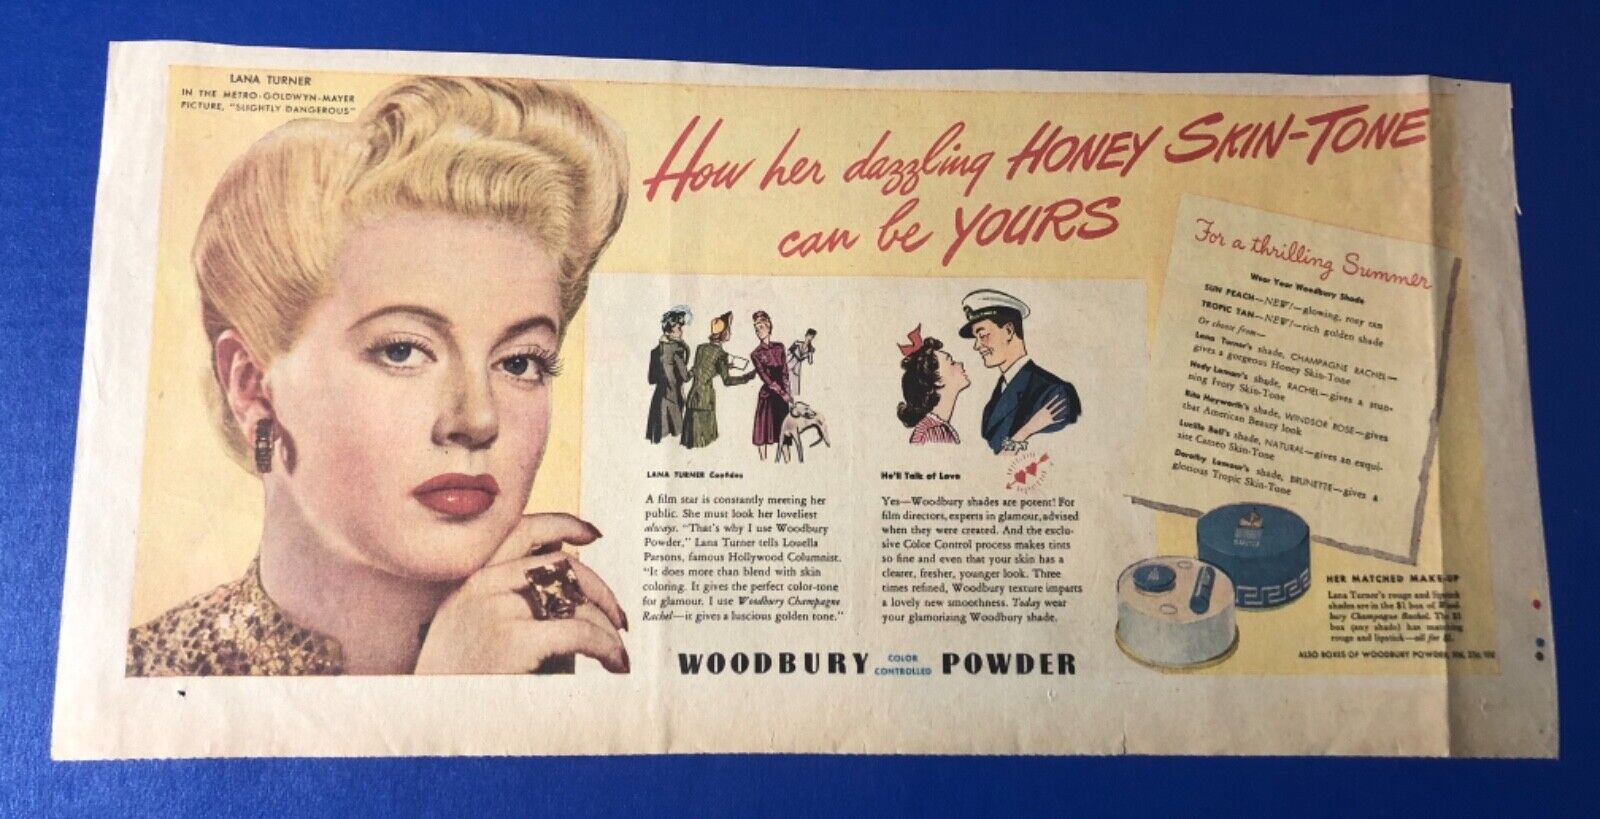 1943 Lana Turner “Slightly Dangerous” Woodbury face Powder Print ad 15.5x7.5”